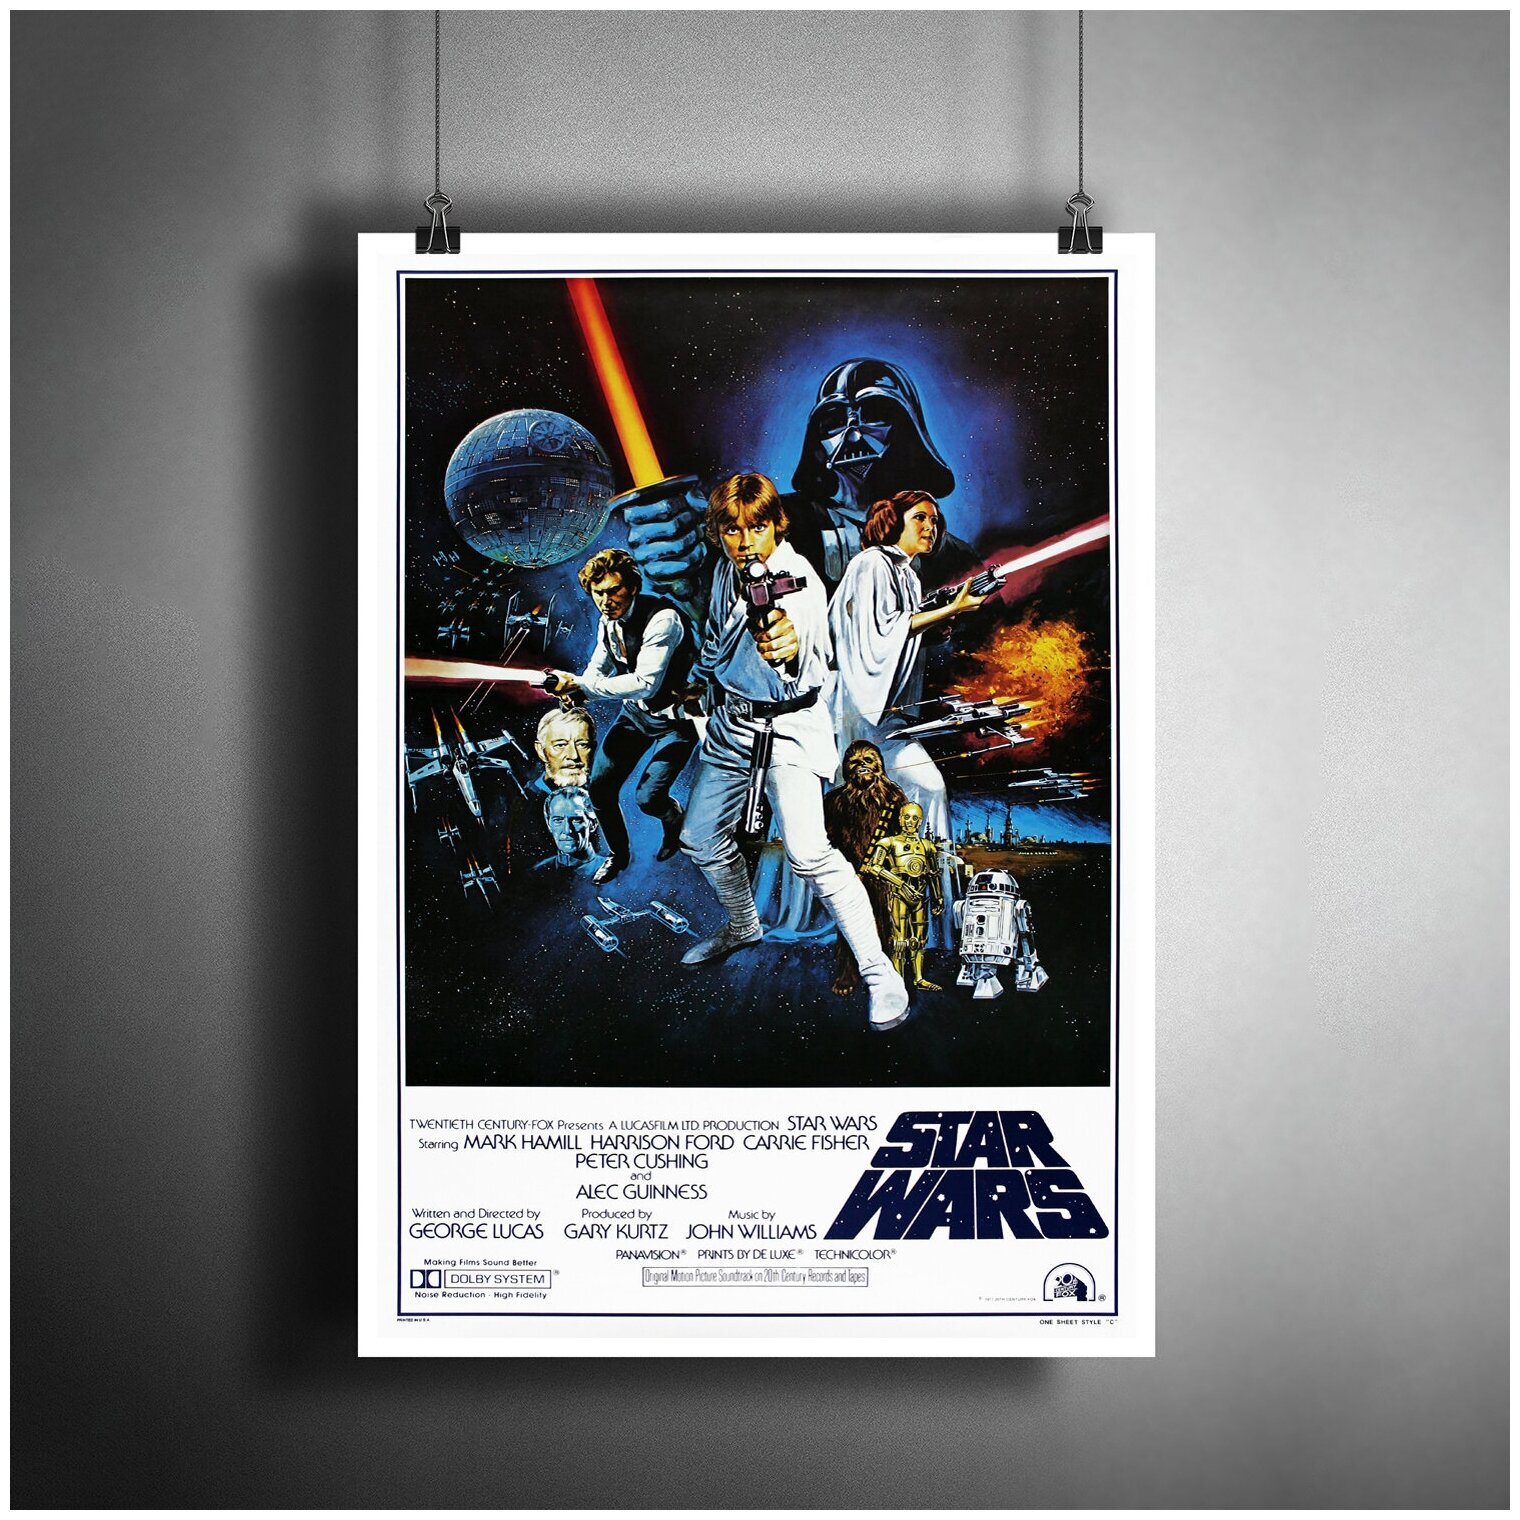 Постер плакат для интерьера "Star Wars. Звёздные войны"/ Декор дома, офиса, комнаты A3 (297 x 420 мм)